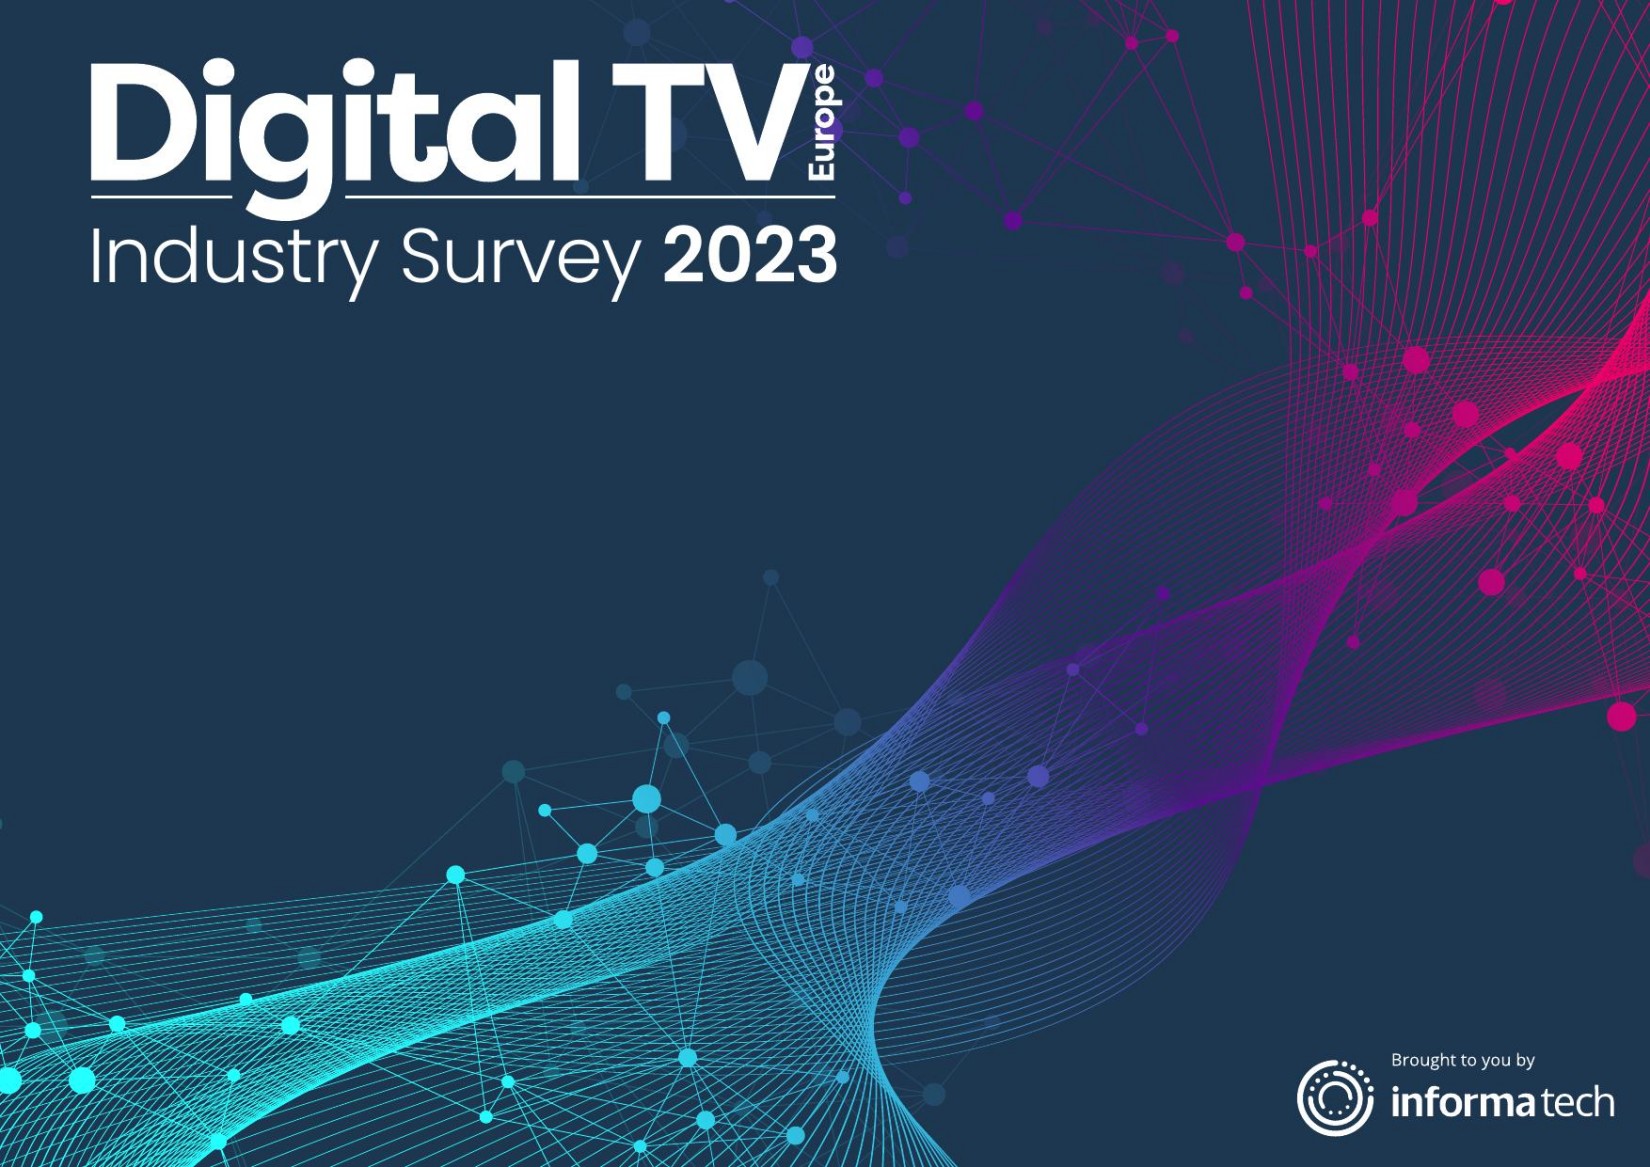 Digital TV Europe - Industry Survey 2023